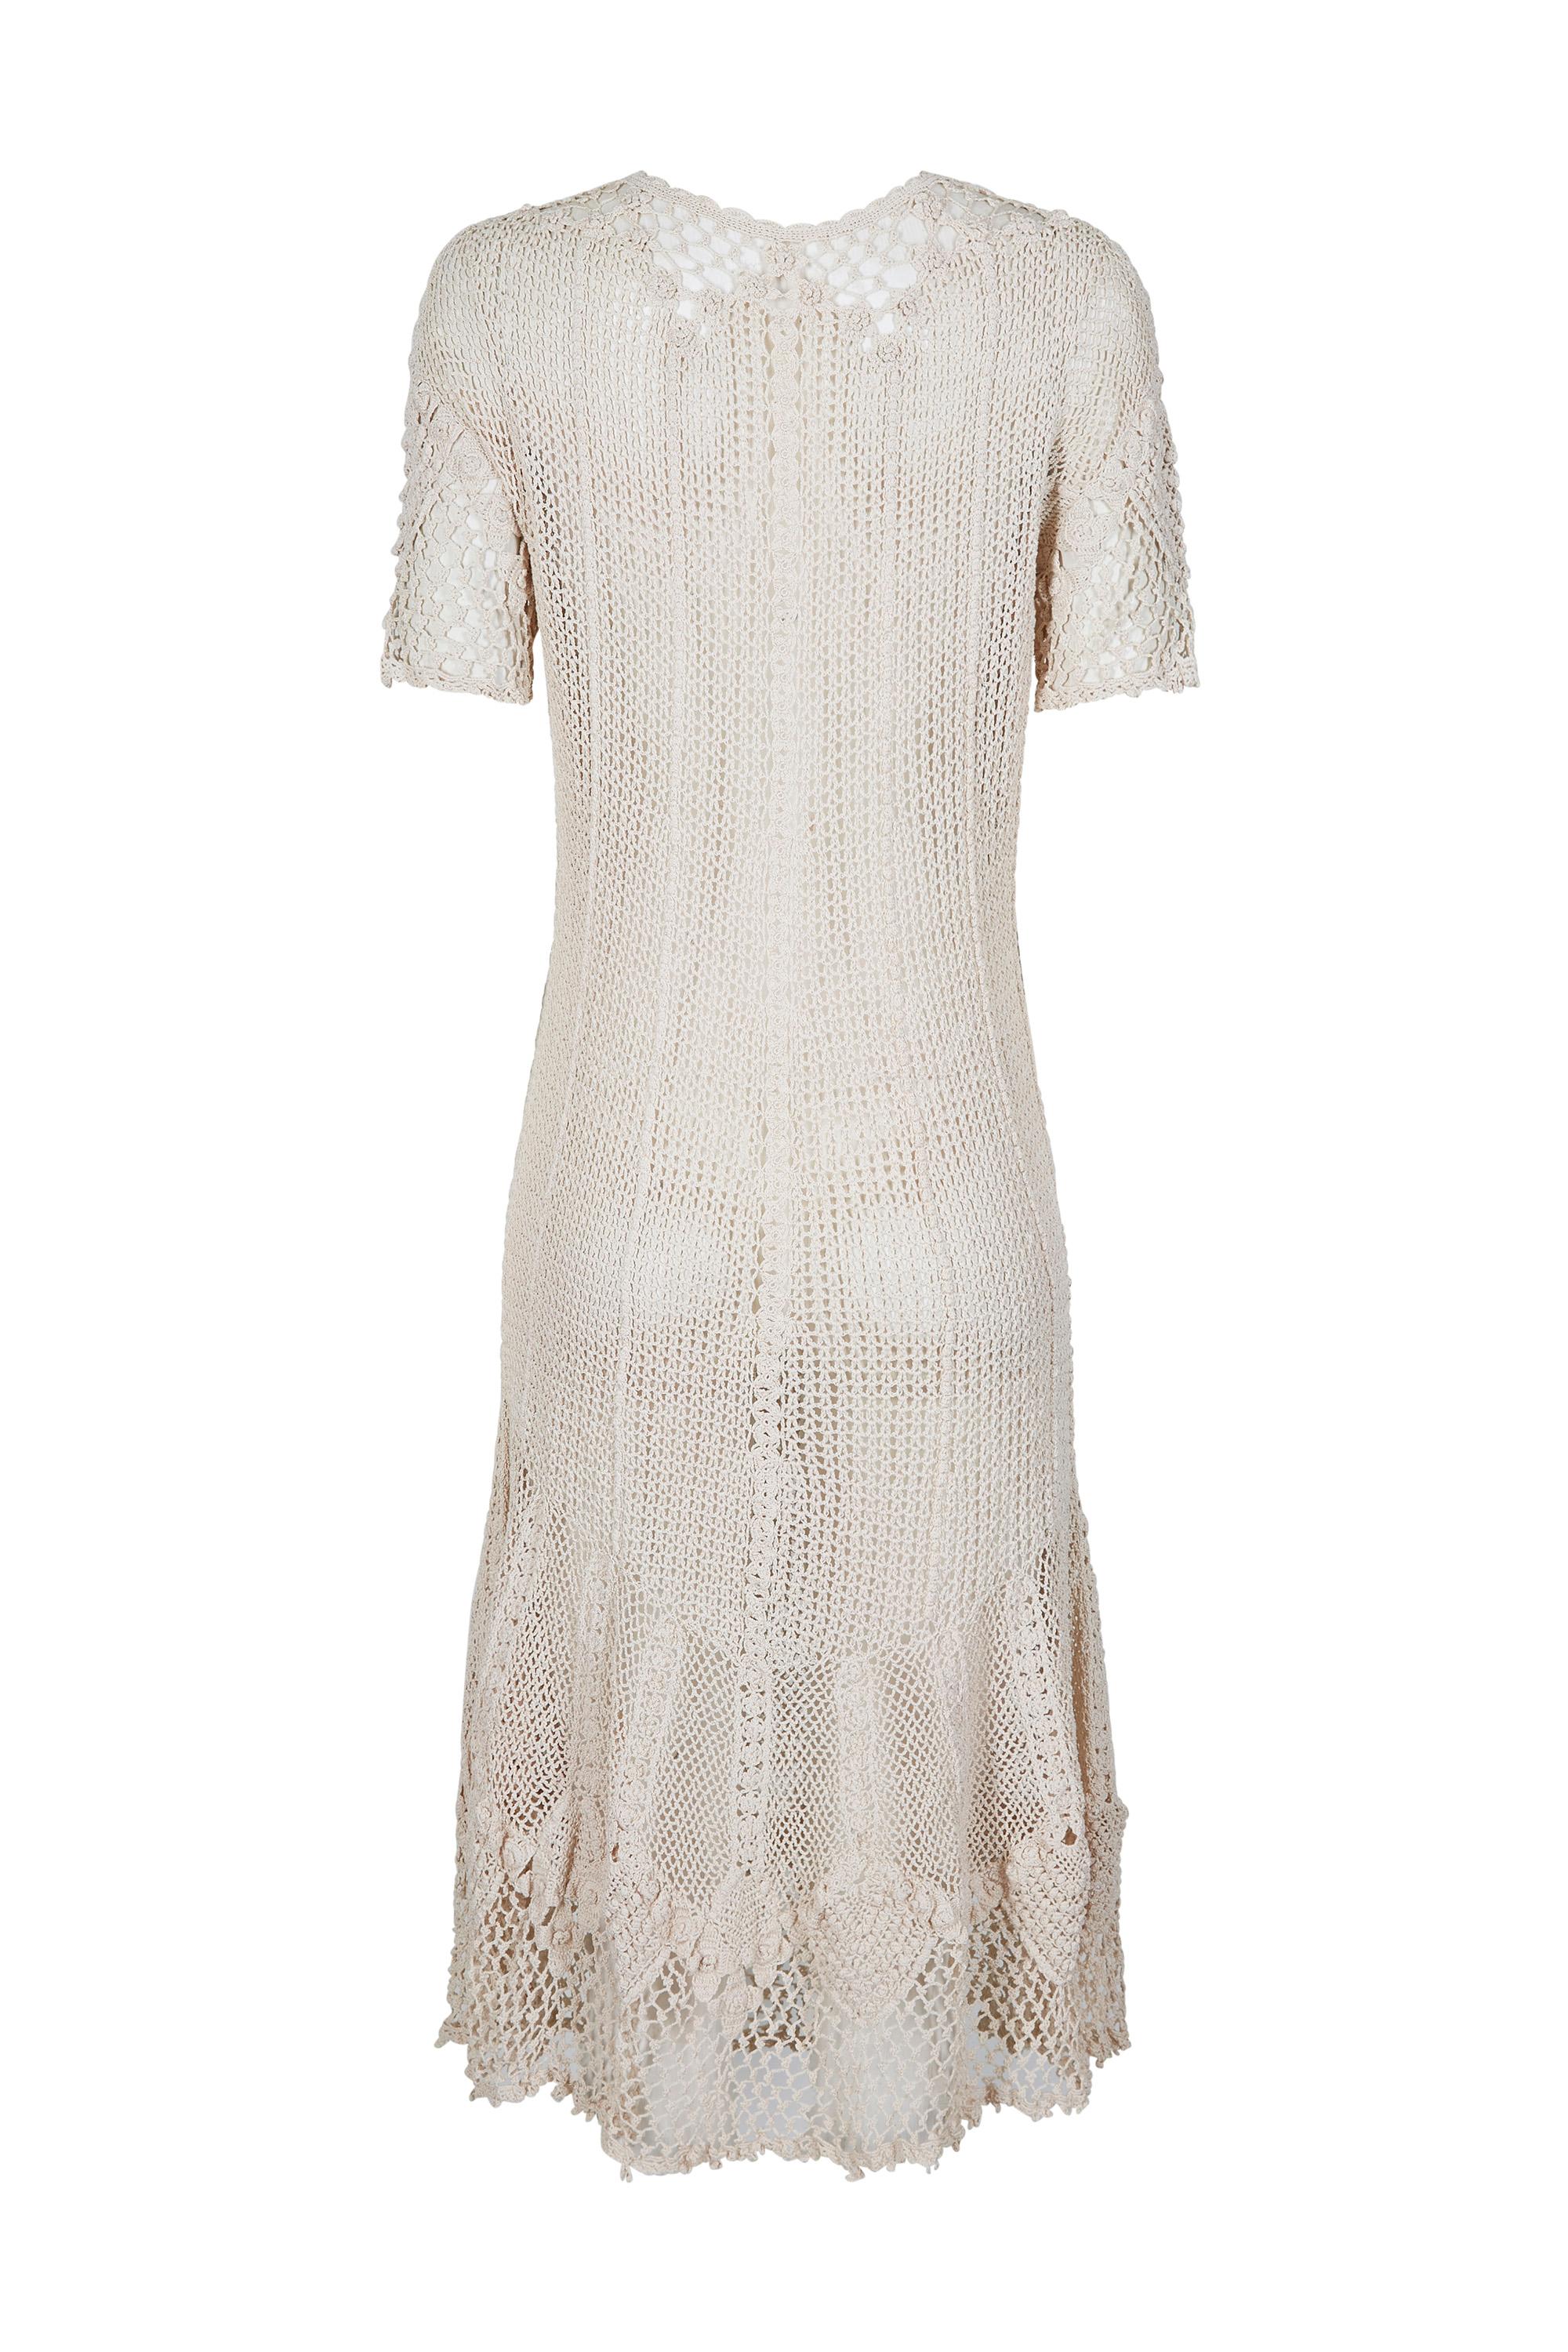 1930s crochet dress